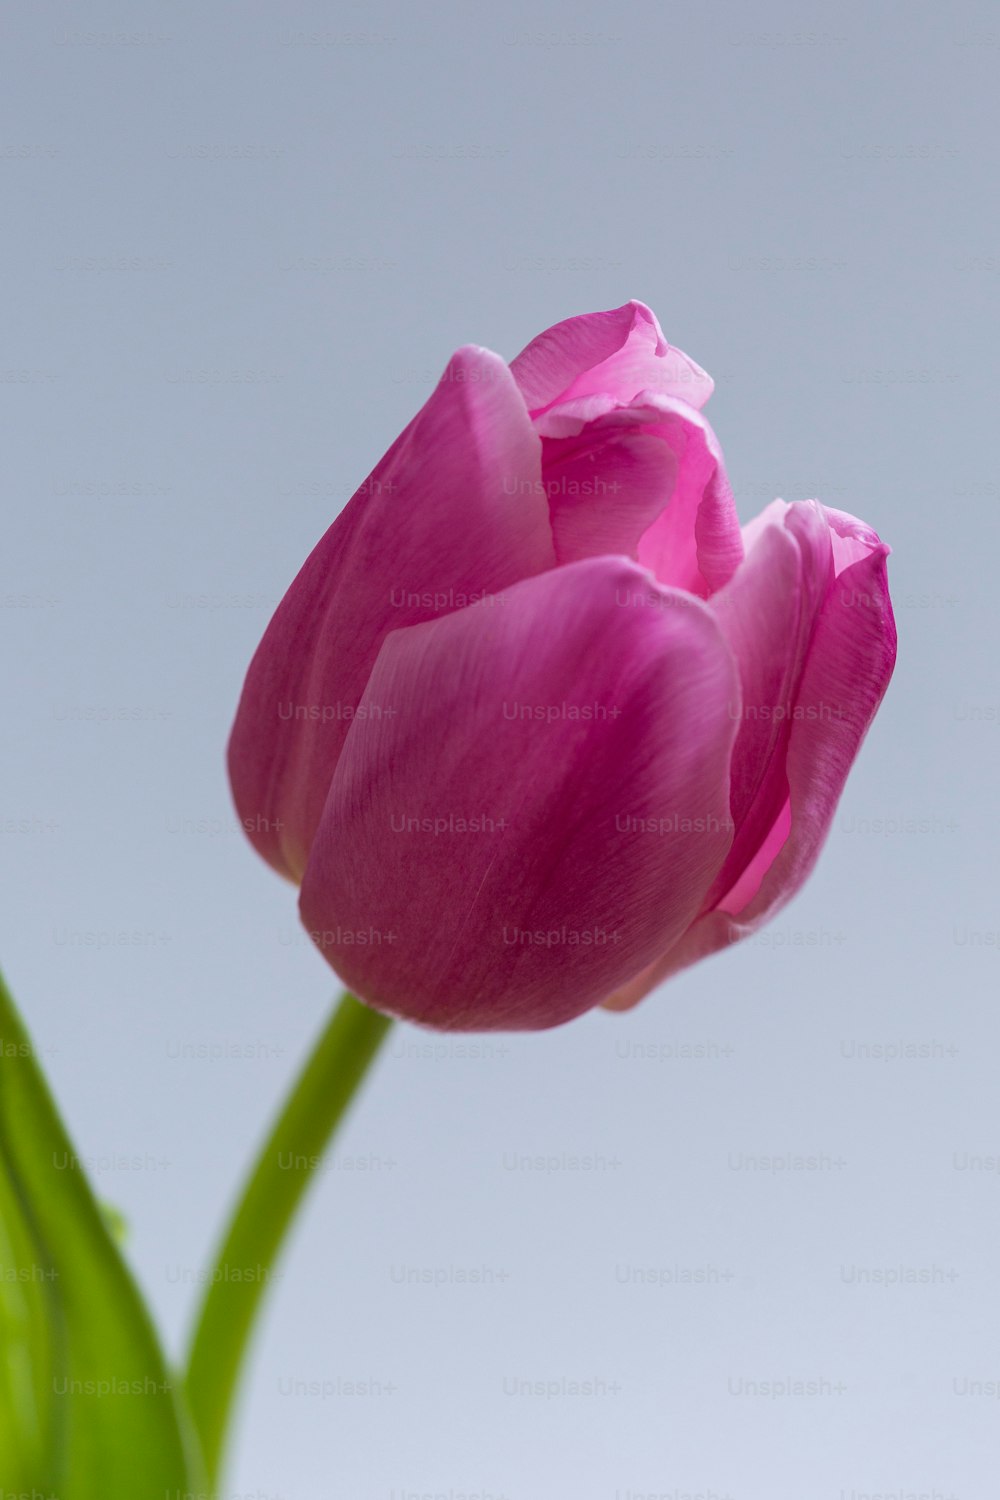 Un singolo tulipano rosa davanti a un cielo blu